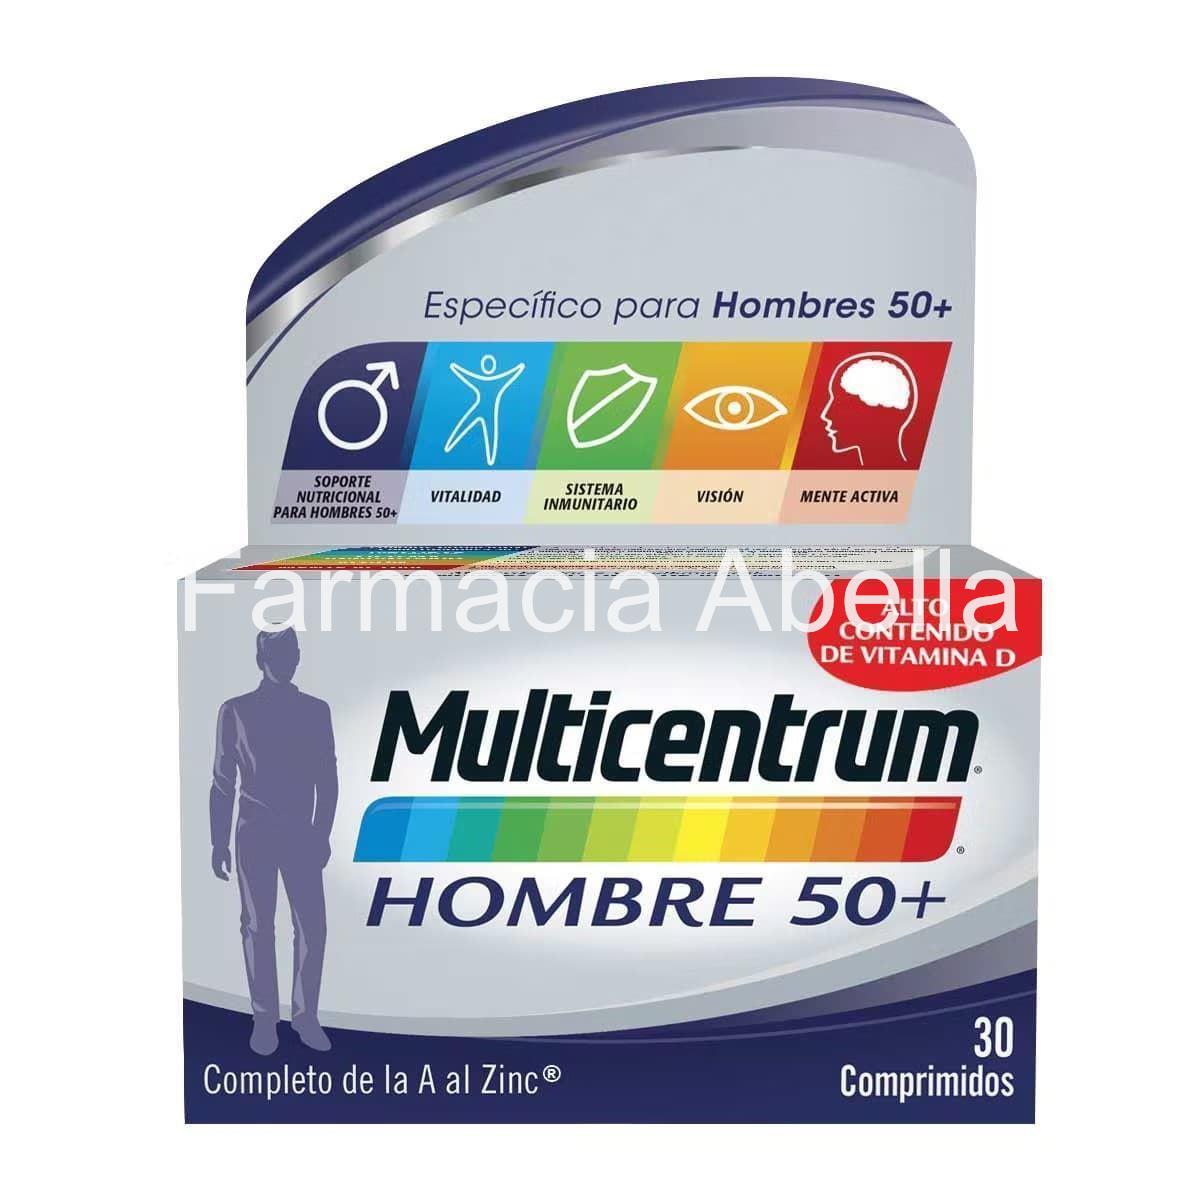 Multicentrum Hombre 50+ 30 comprimidos - Imagen 1